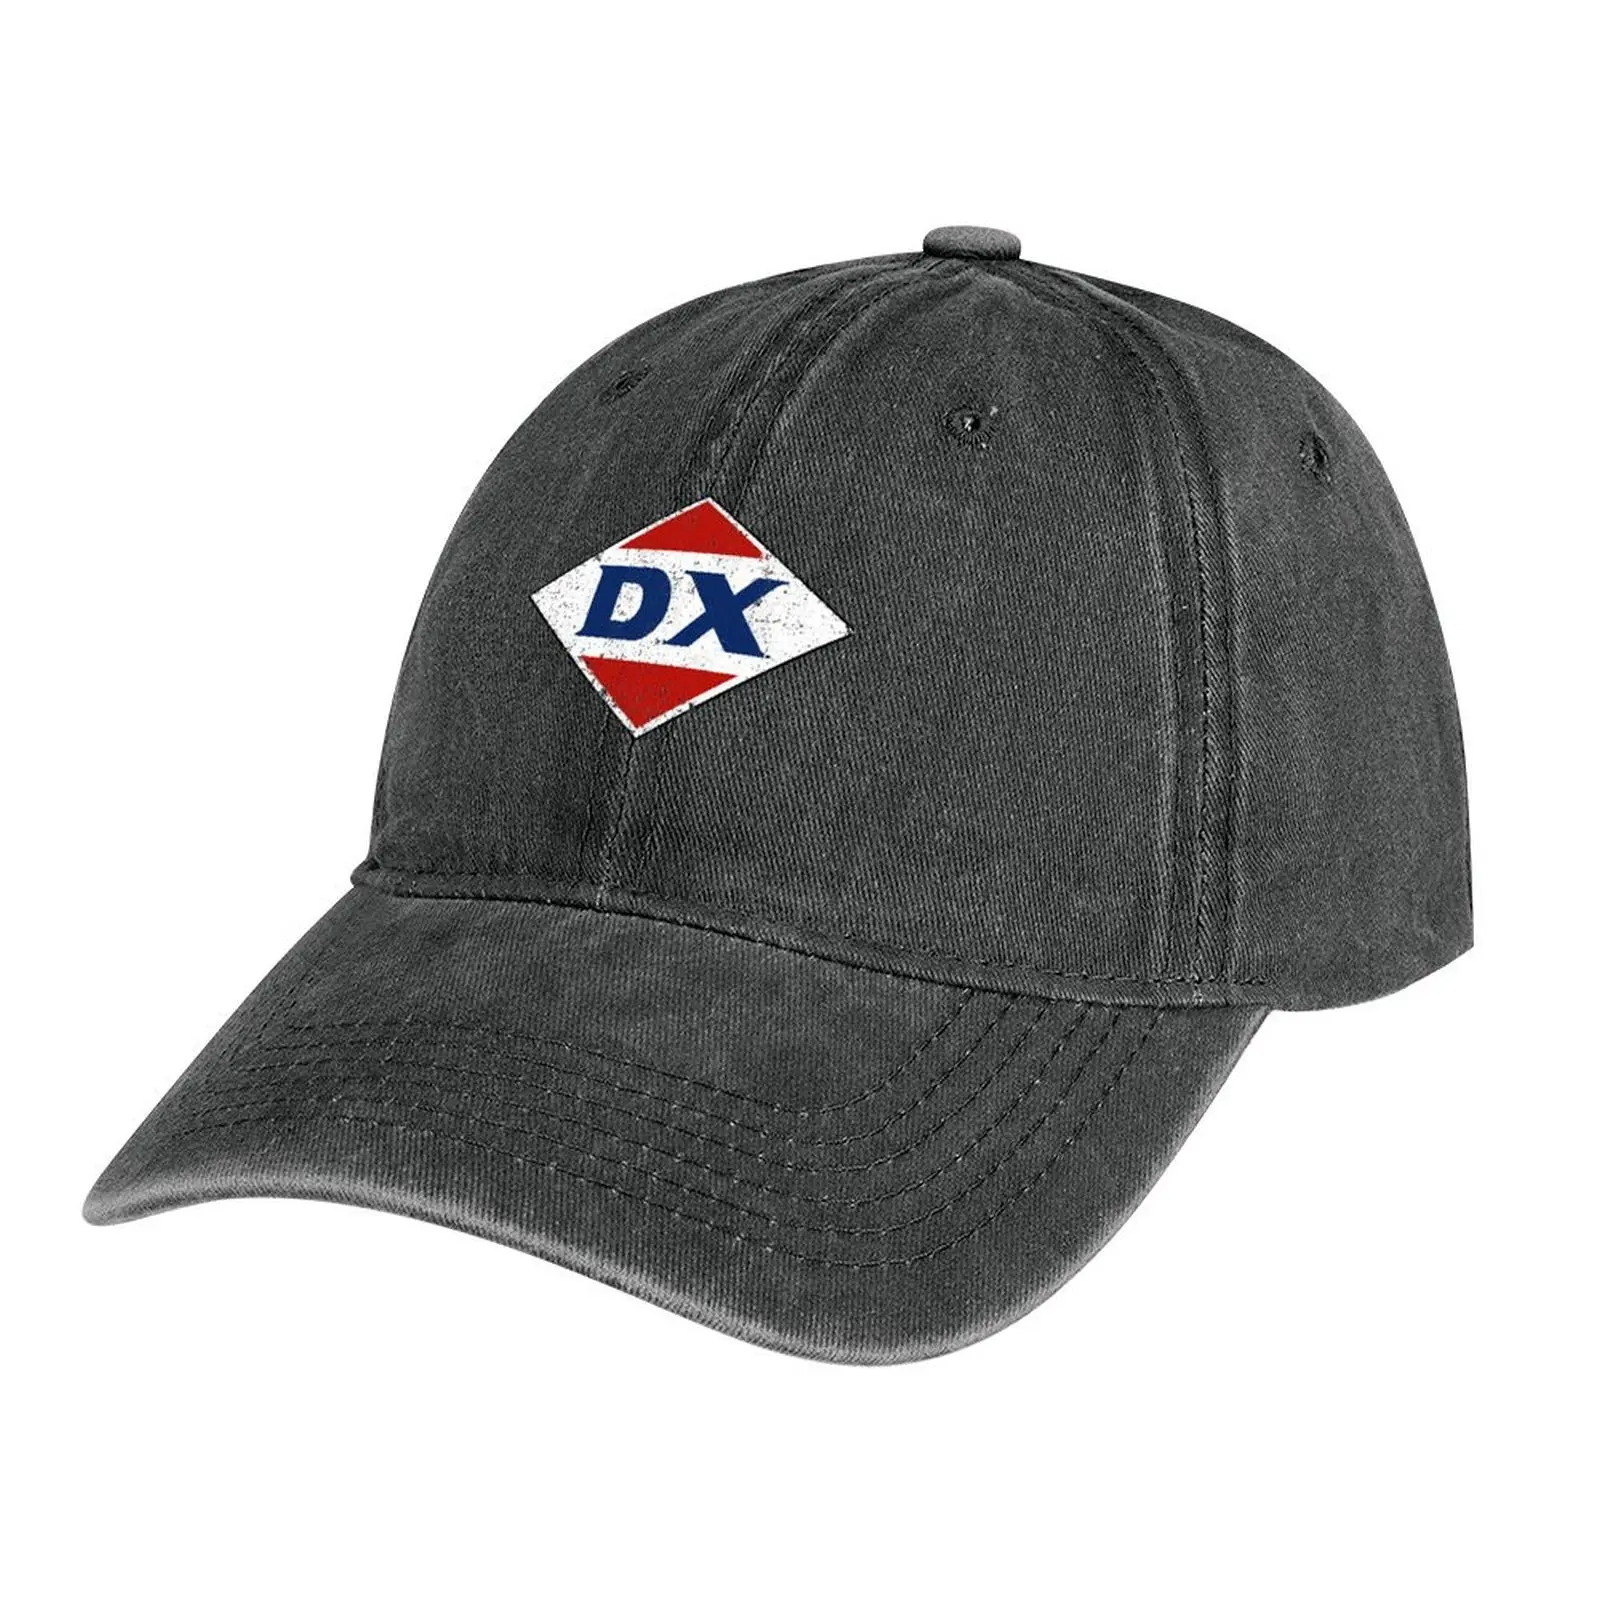 

DX Sign Cowboy Hat New In The Hat Custom Cap Hat Luxury Brand |-F-| Caps Women Men's